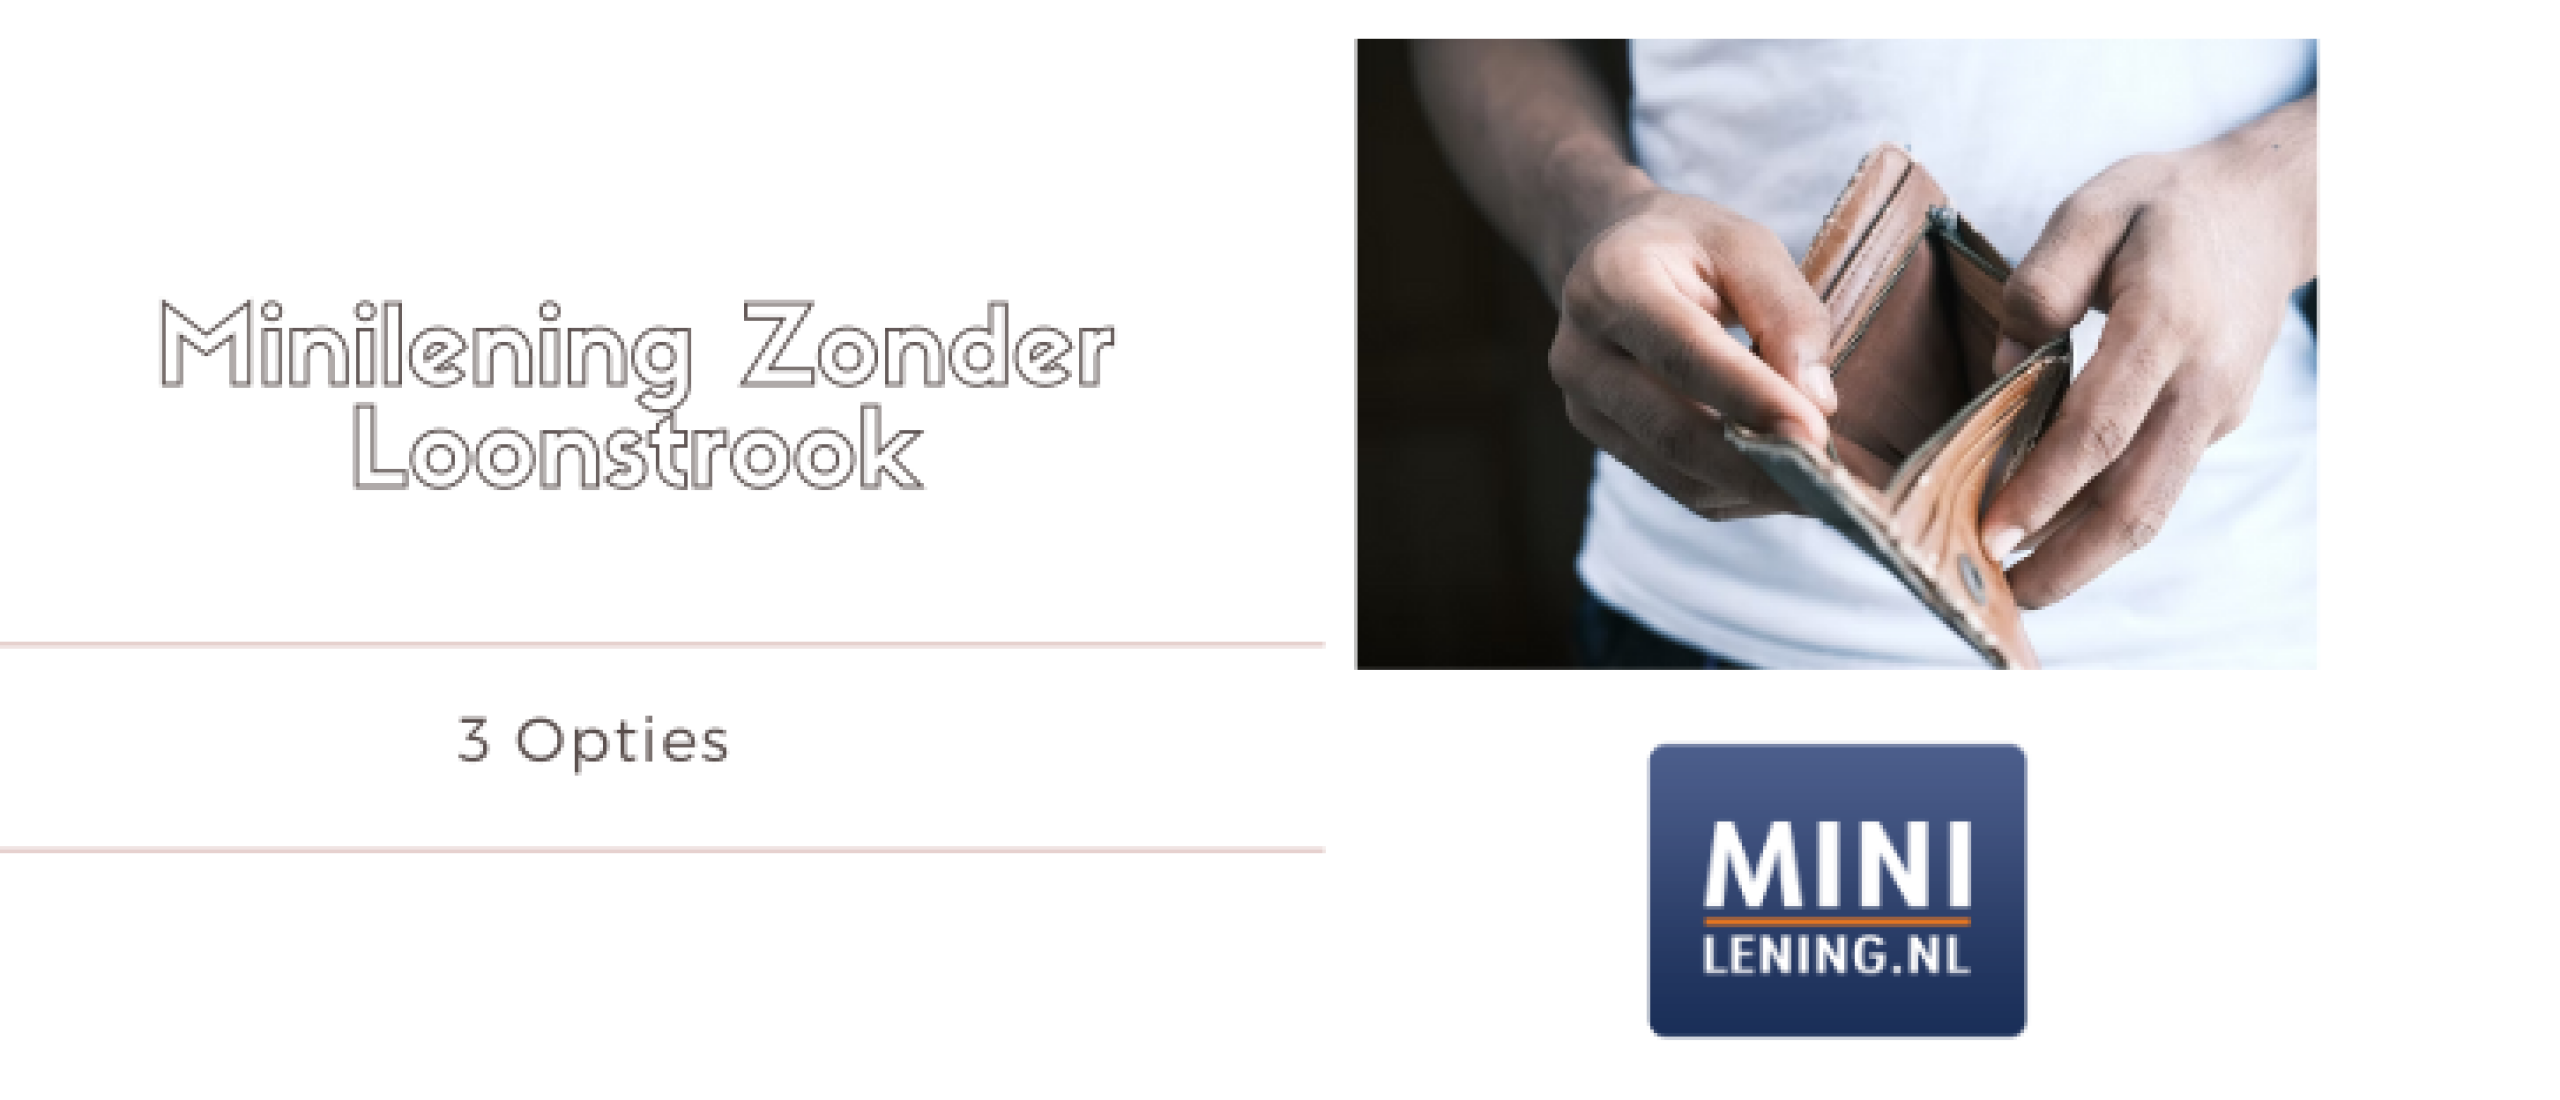 Minilening Zonder Loonstrook: 3 Opties | Minilening.nl